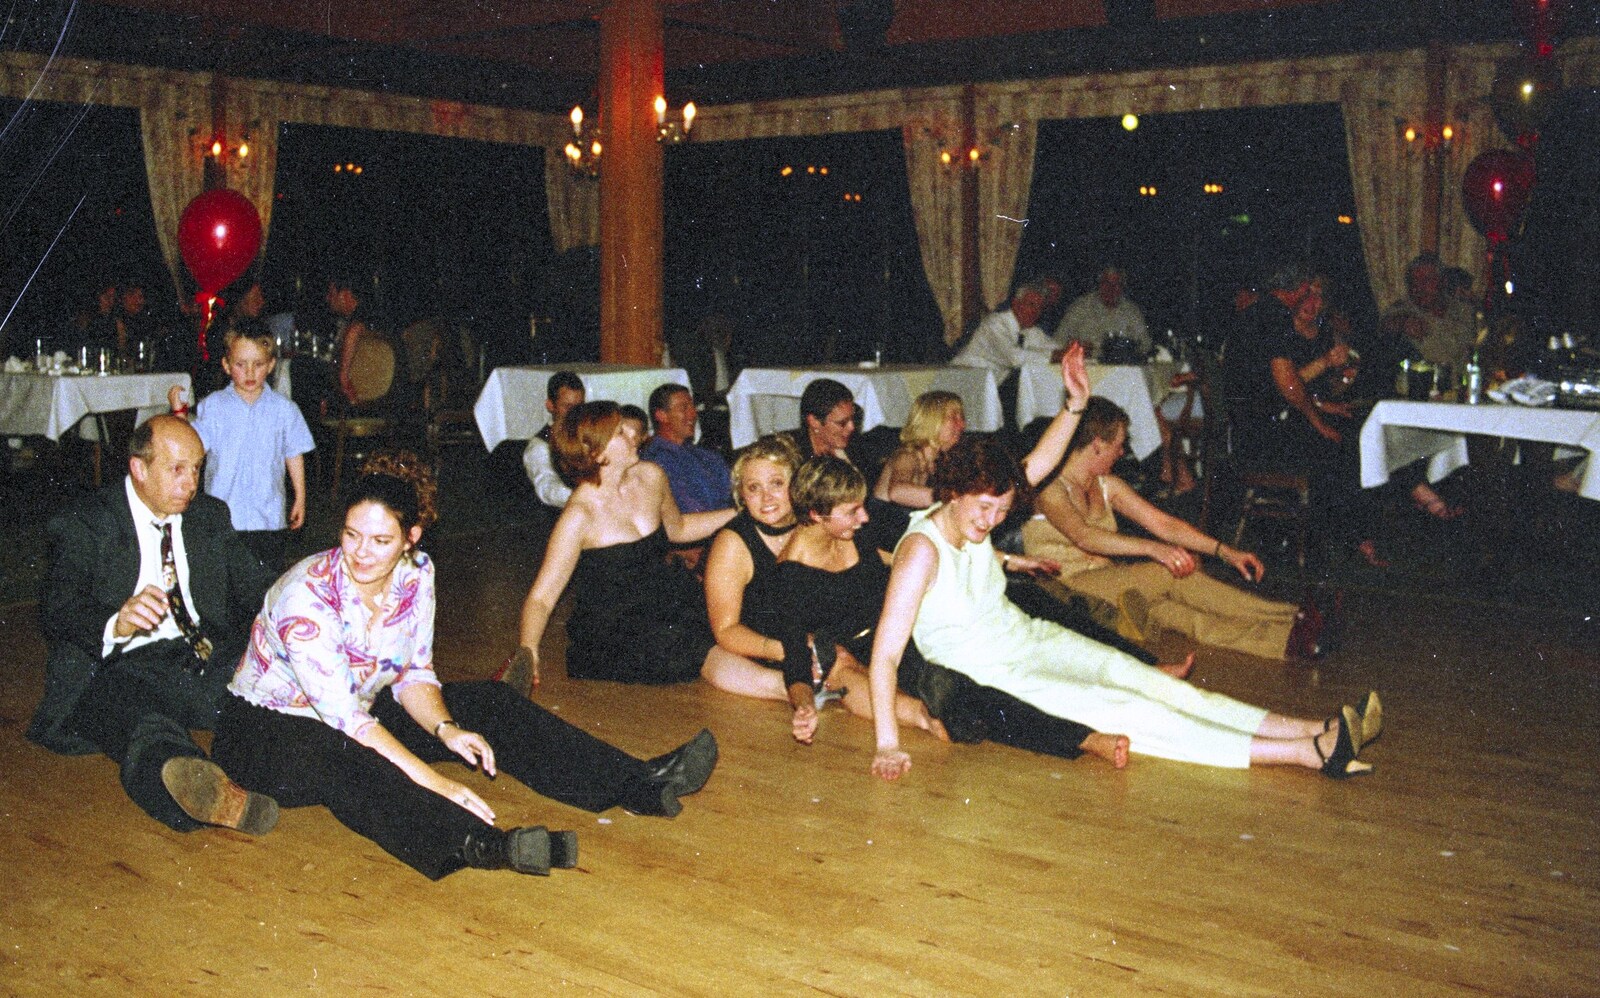 More boat rocking from Paula's 3G Lab Wedding Reception, Huntingdon, Cambridgeshire - 4th September 2000